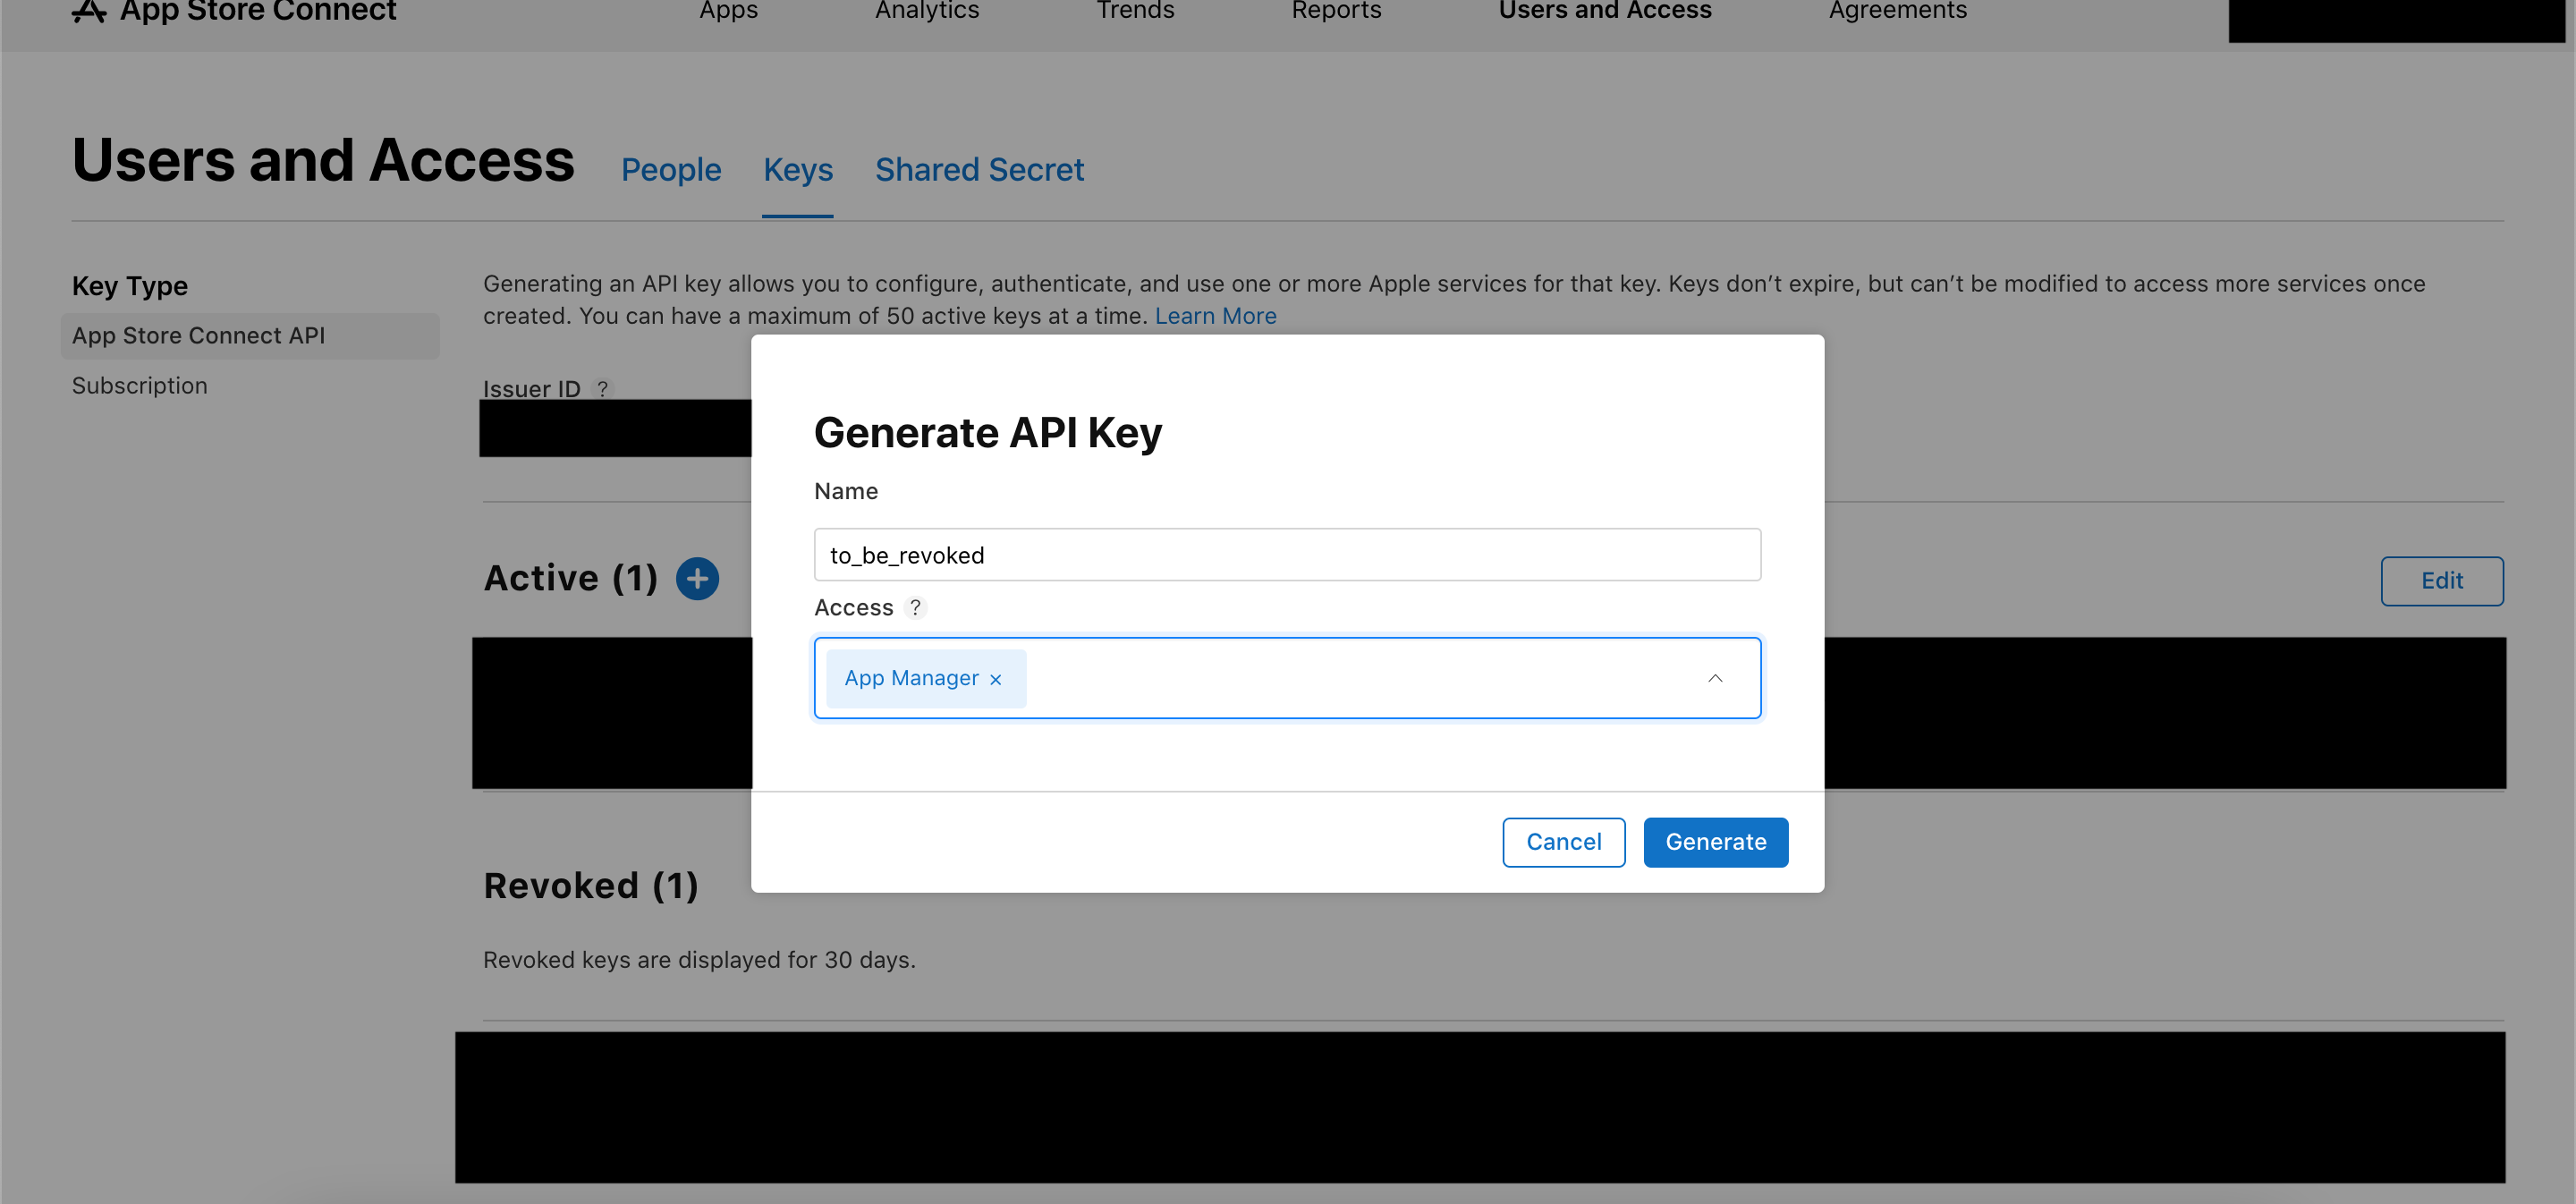 Image 4 - Access key form